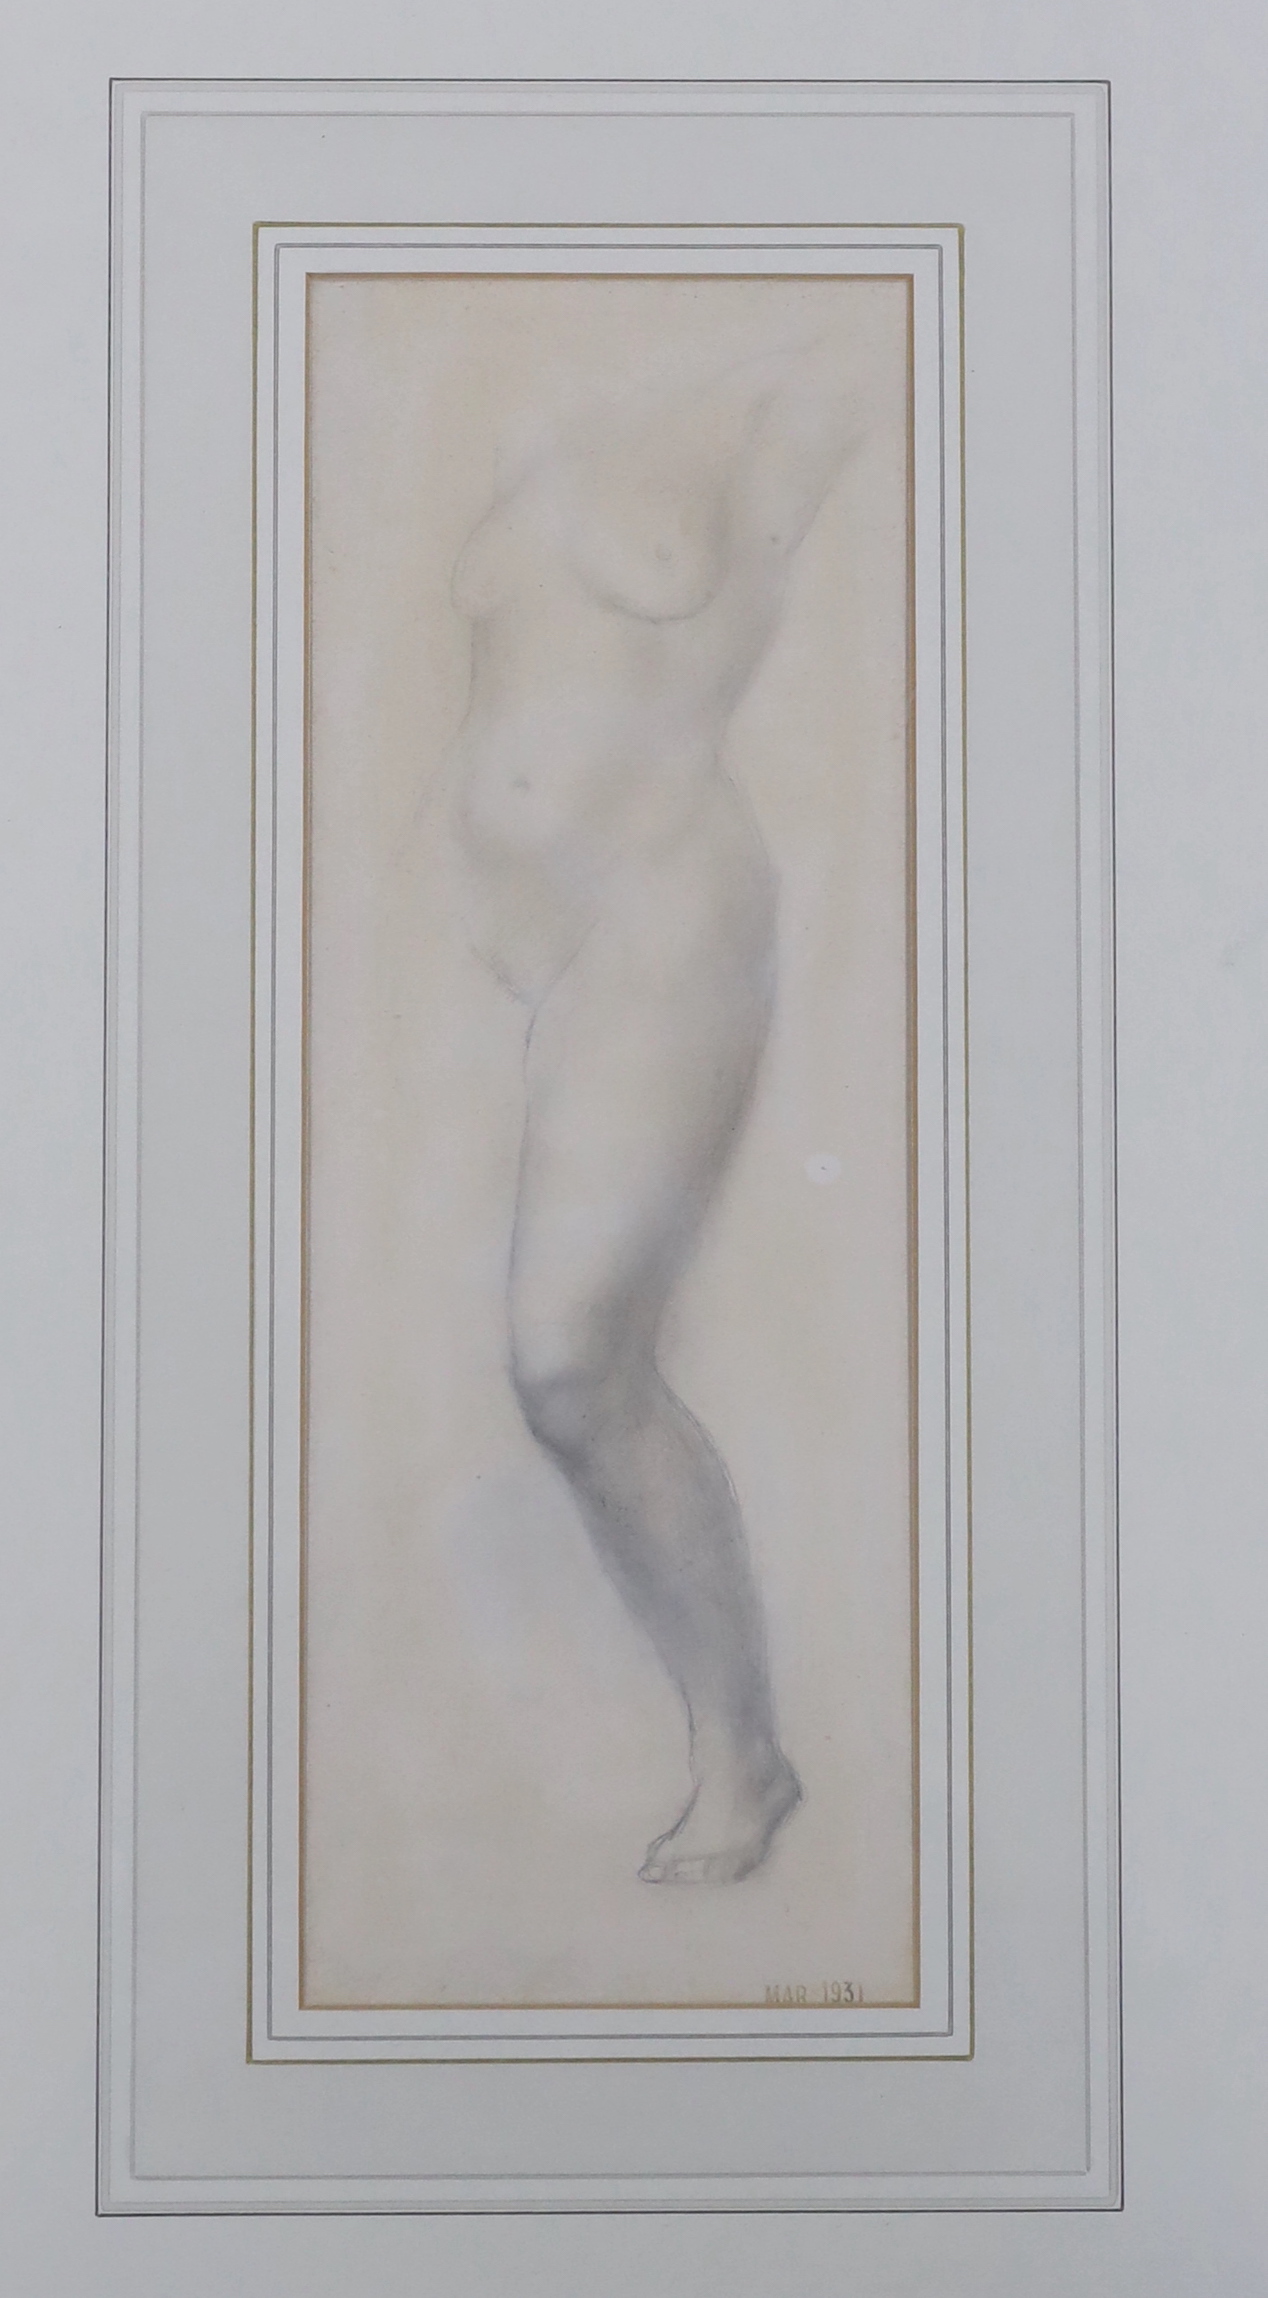 John Frye Bourne (1912-1991), pencil sketch, Nude study, unsigned, stamped Mar 1931, details